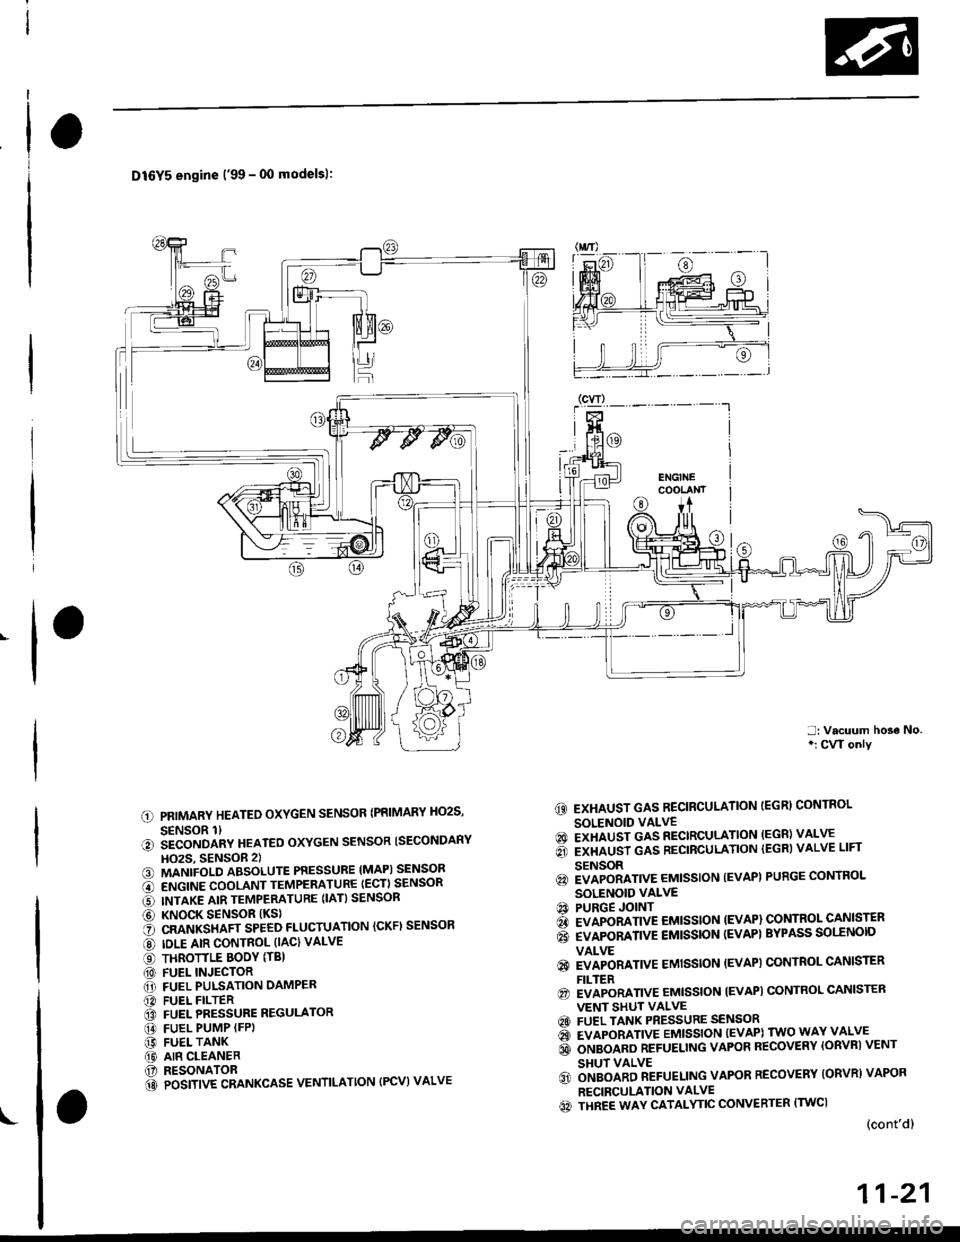 HONDA CIVIC 1997 6.G Workshop Manual D16Y5 engine (99 - 00 modelsl:
O) PRIMARY HEATED OXYGEN SENSOR (PBIMARY HO2S,
SENSOR 1)
O SECONDARY HEATEO OXYGEN SENSOR {SECONDARY
HO2S. SENSOR 2)
6] MANIFOLD ABSOLUTE PRESSURE IMAPI SENSOR
rO CruCI